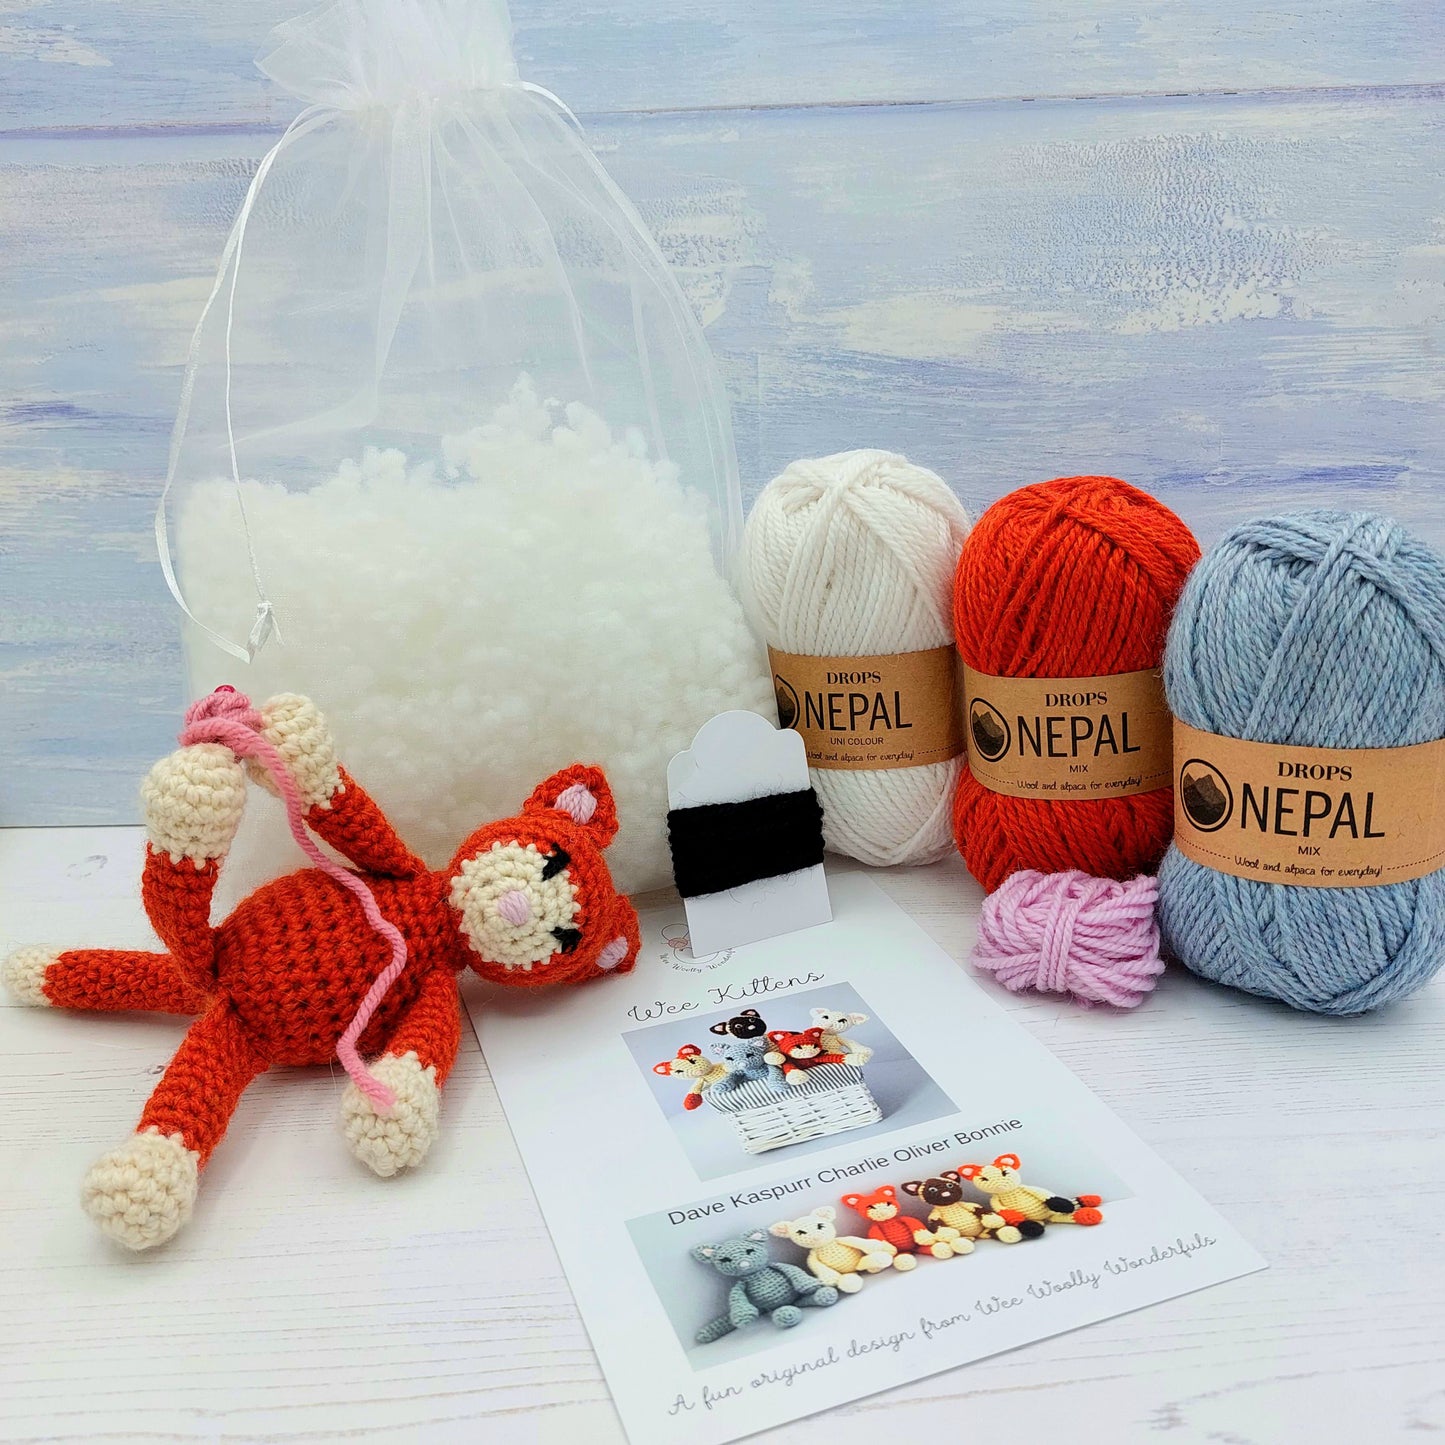 Contents of Kitten Crochet Kit